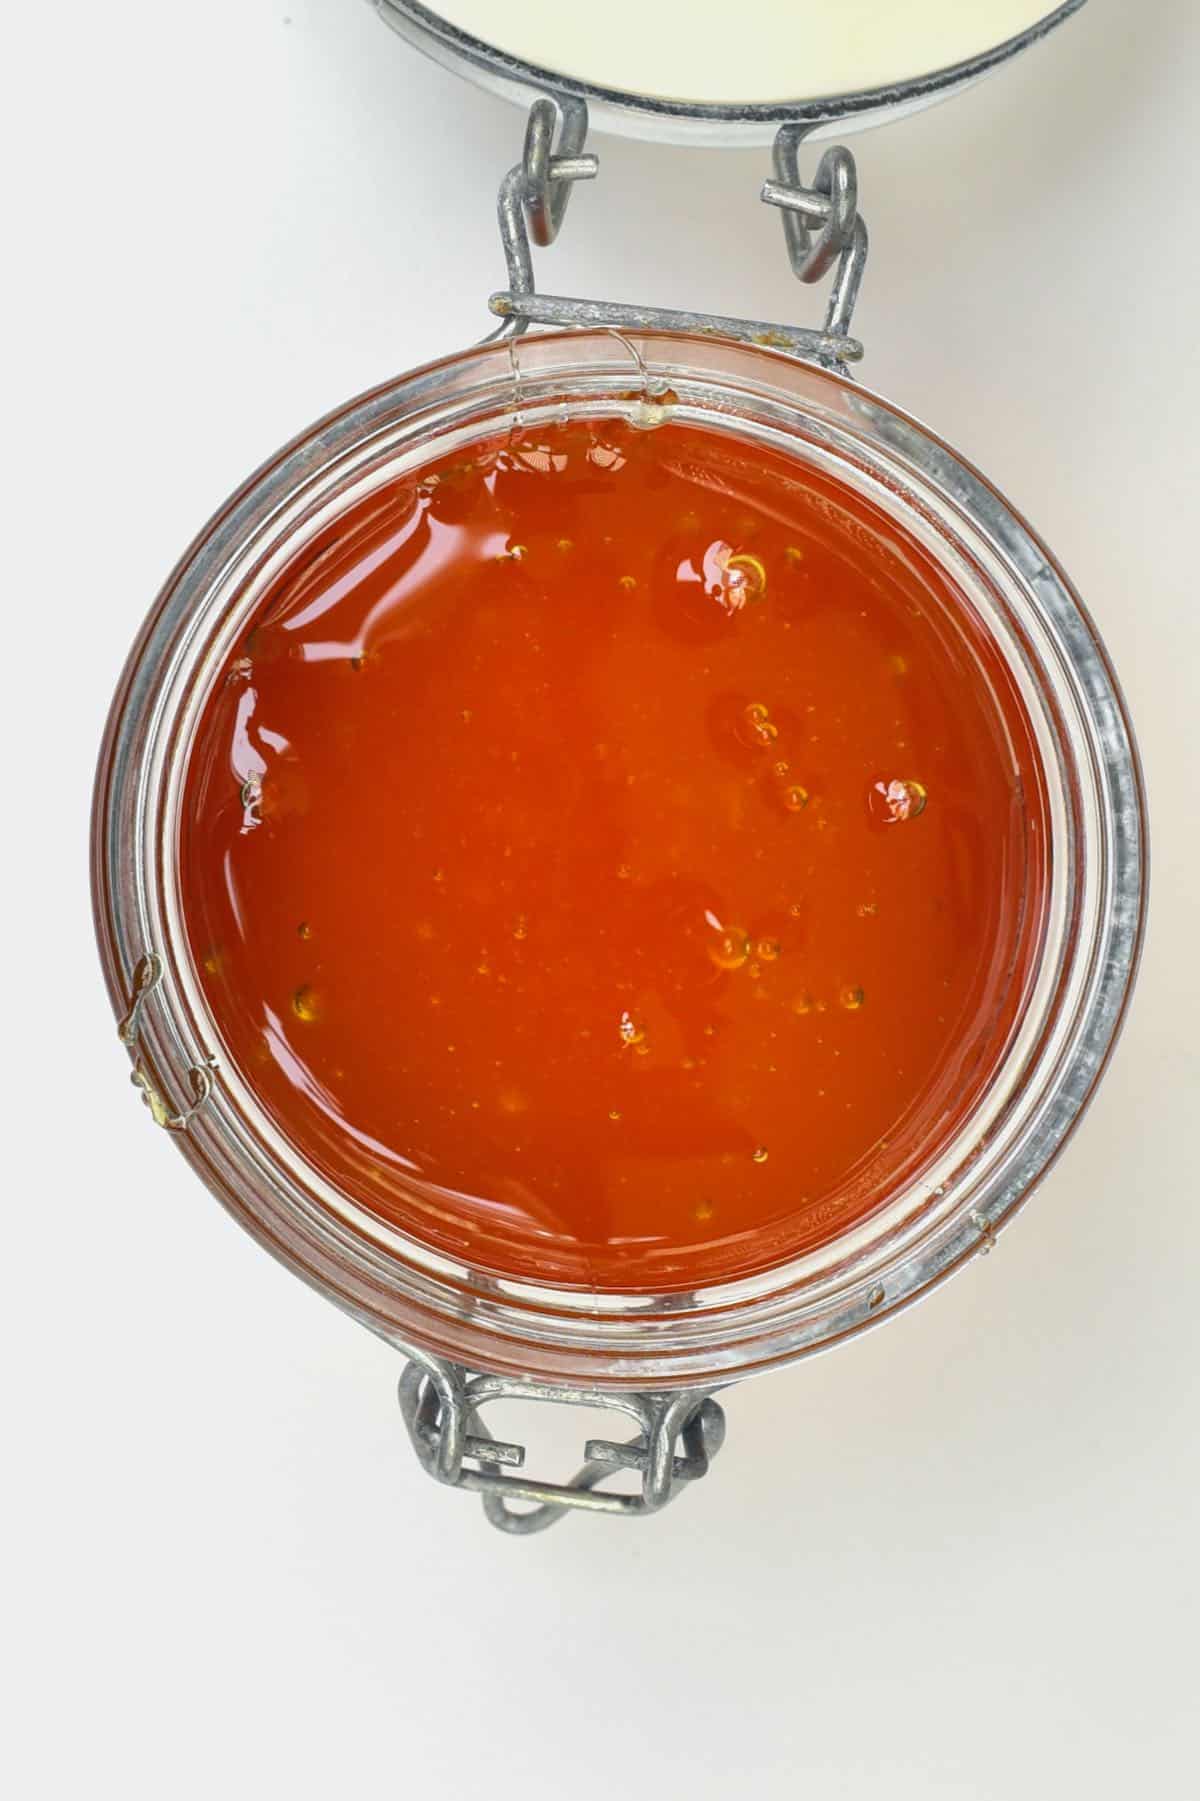 Vegan dandelion syrup in a jar